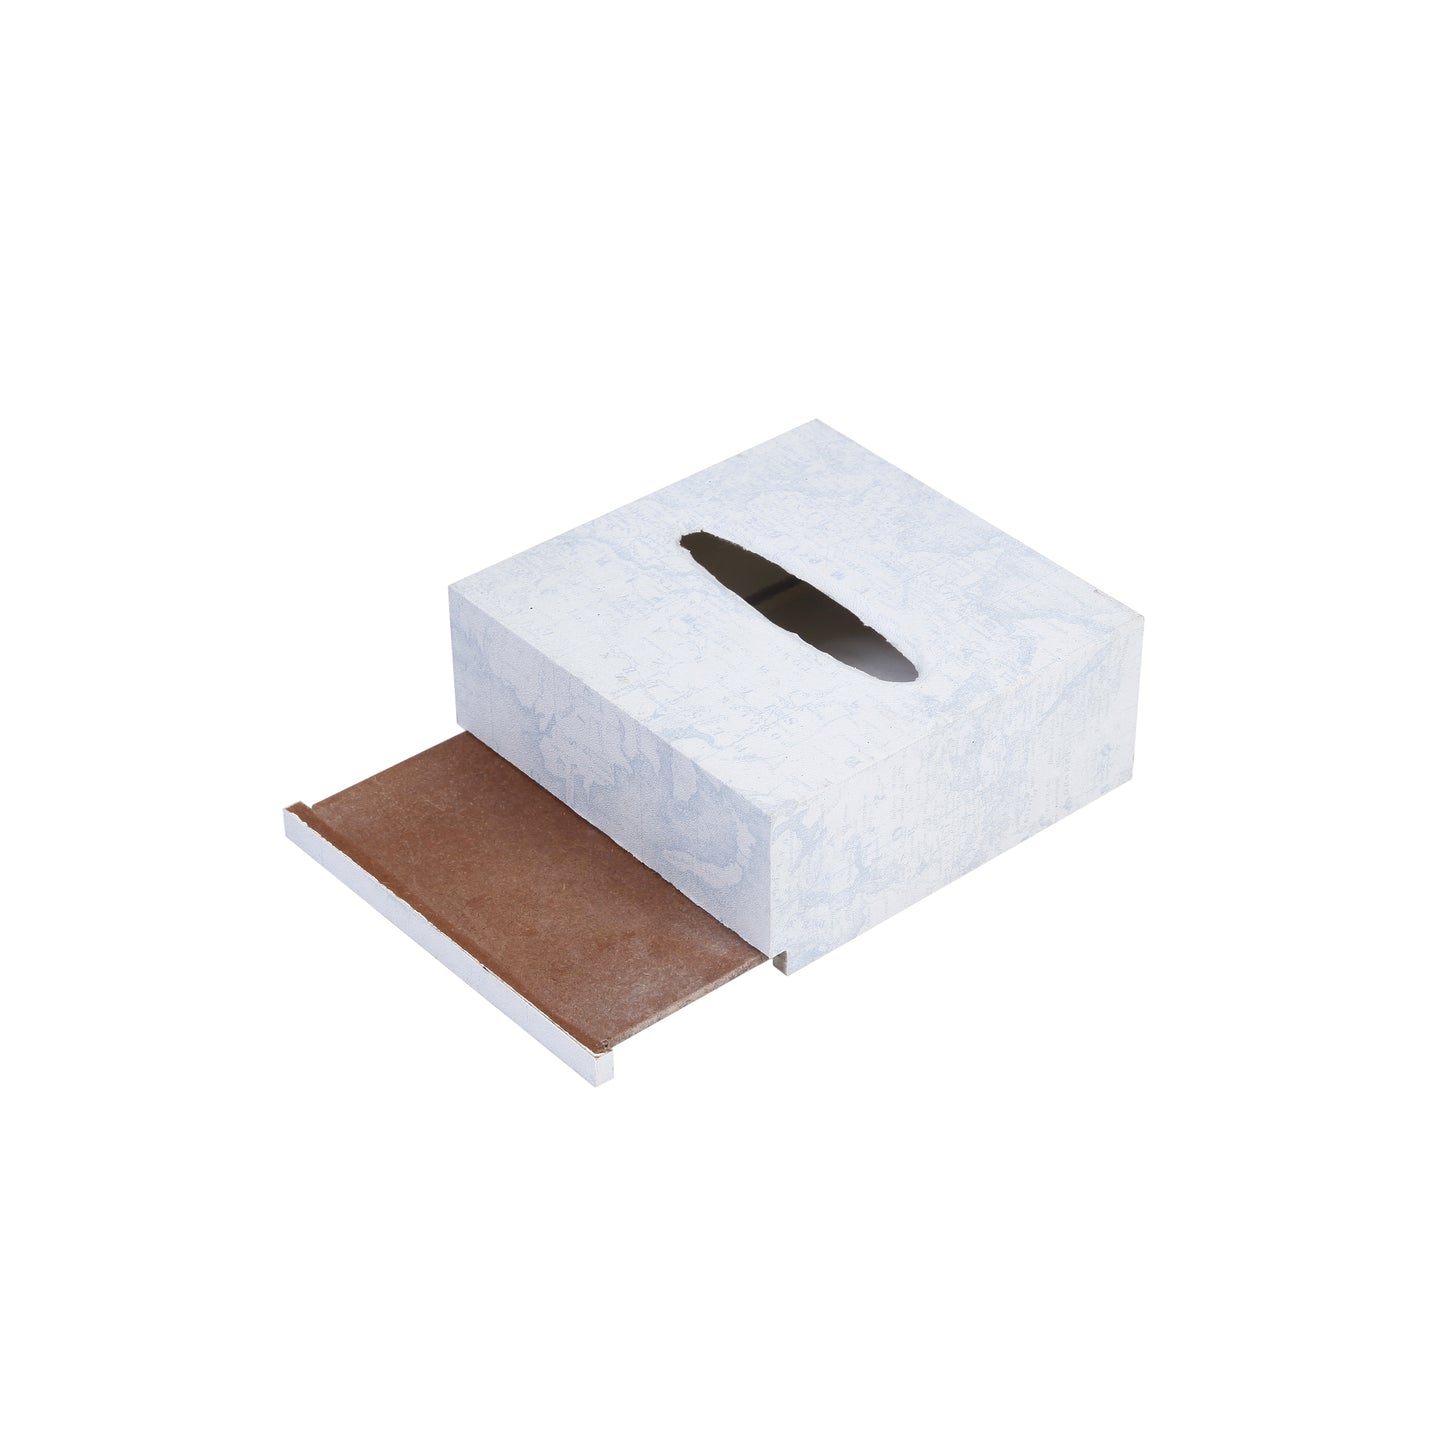 A Tiny Mistake Explorers Edition Square Tissue Box, 18 x 18 x 7.5 cm